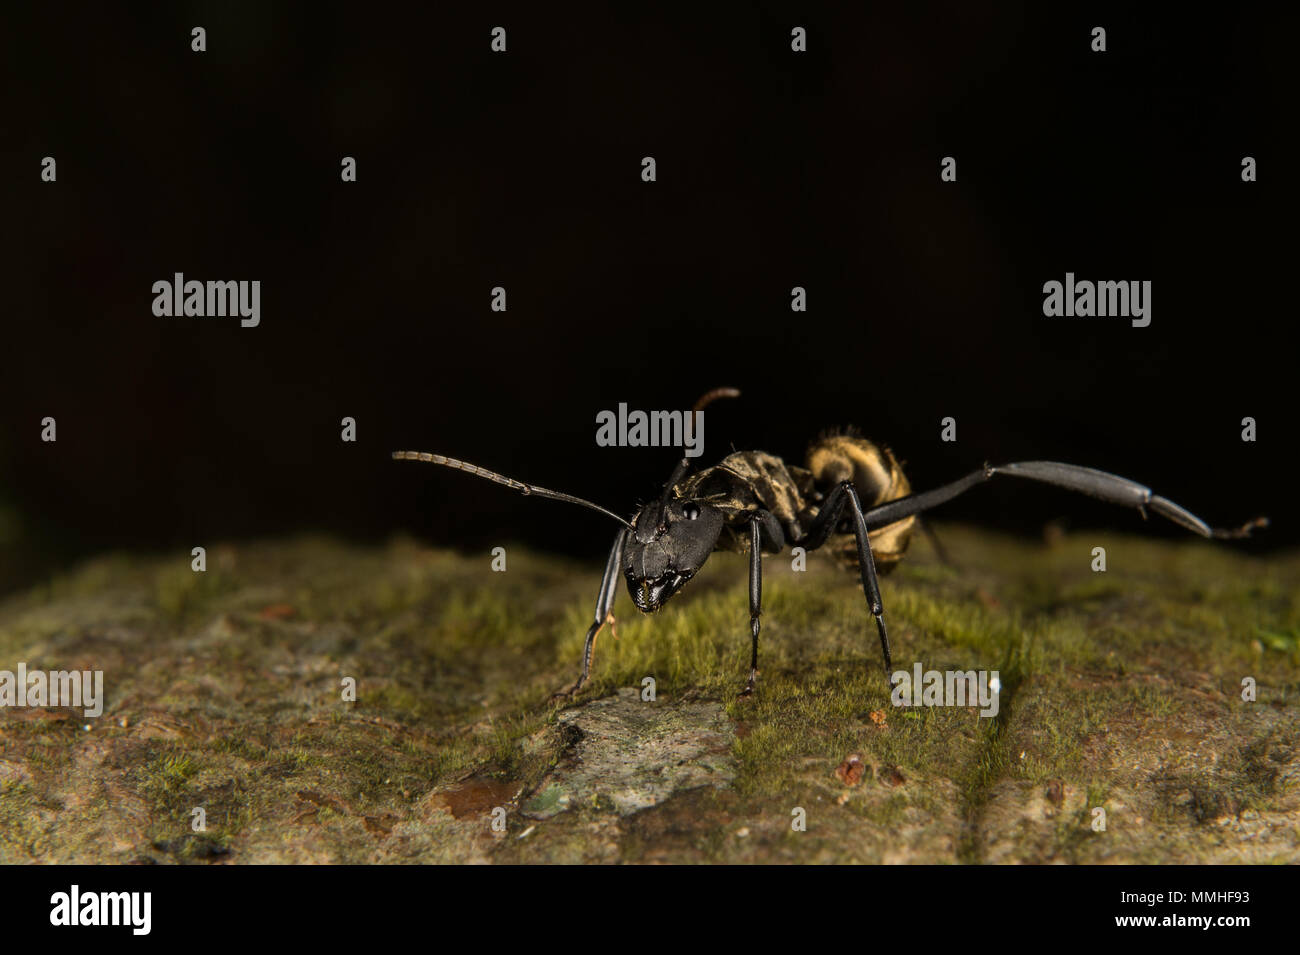 Golden fourmi Camponotus, sericeiventris, Formicidae, Parc National Carara, Costa Rica, Amérique Centrale, Amérique Centrale Banque D'Images